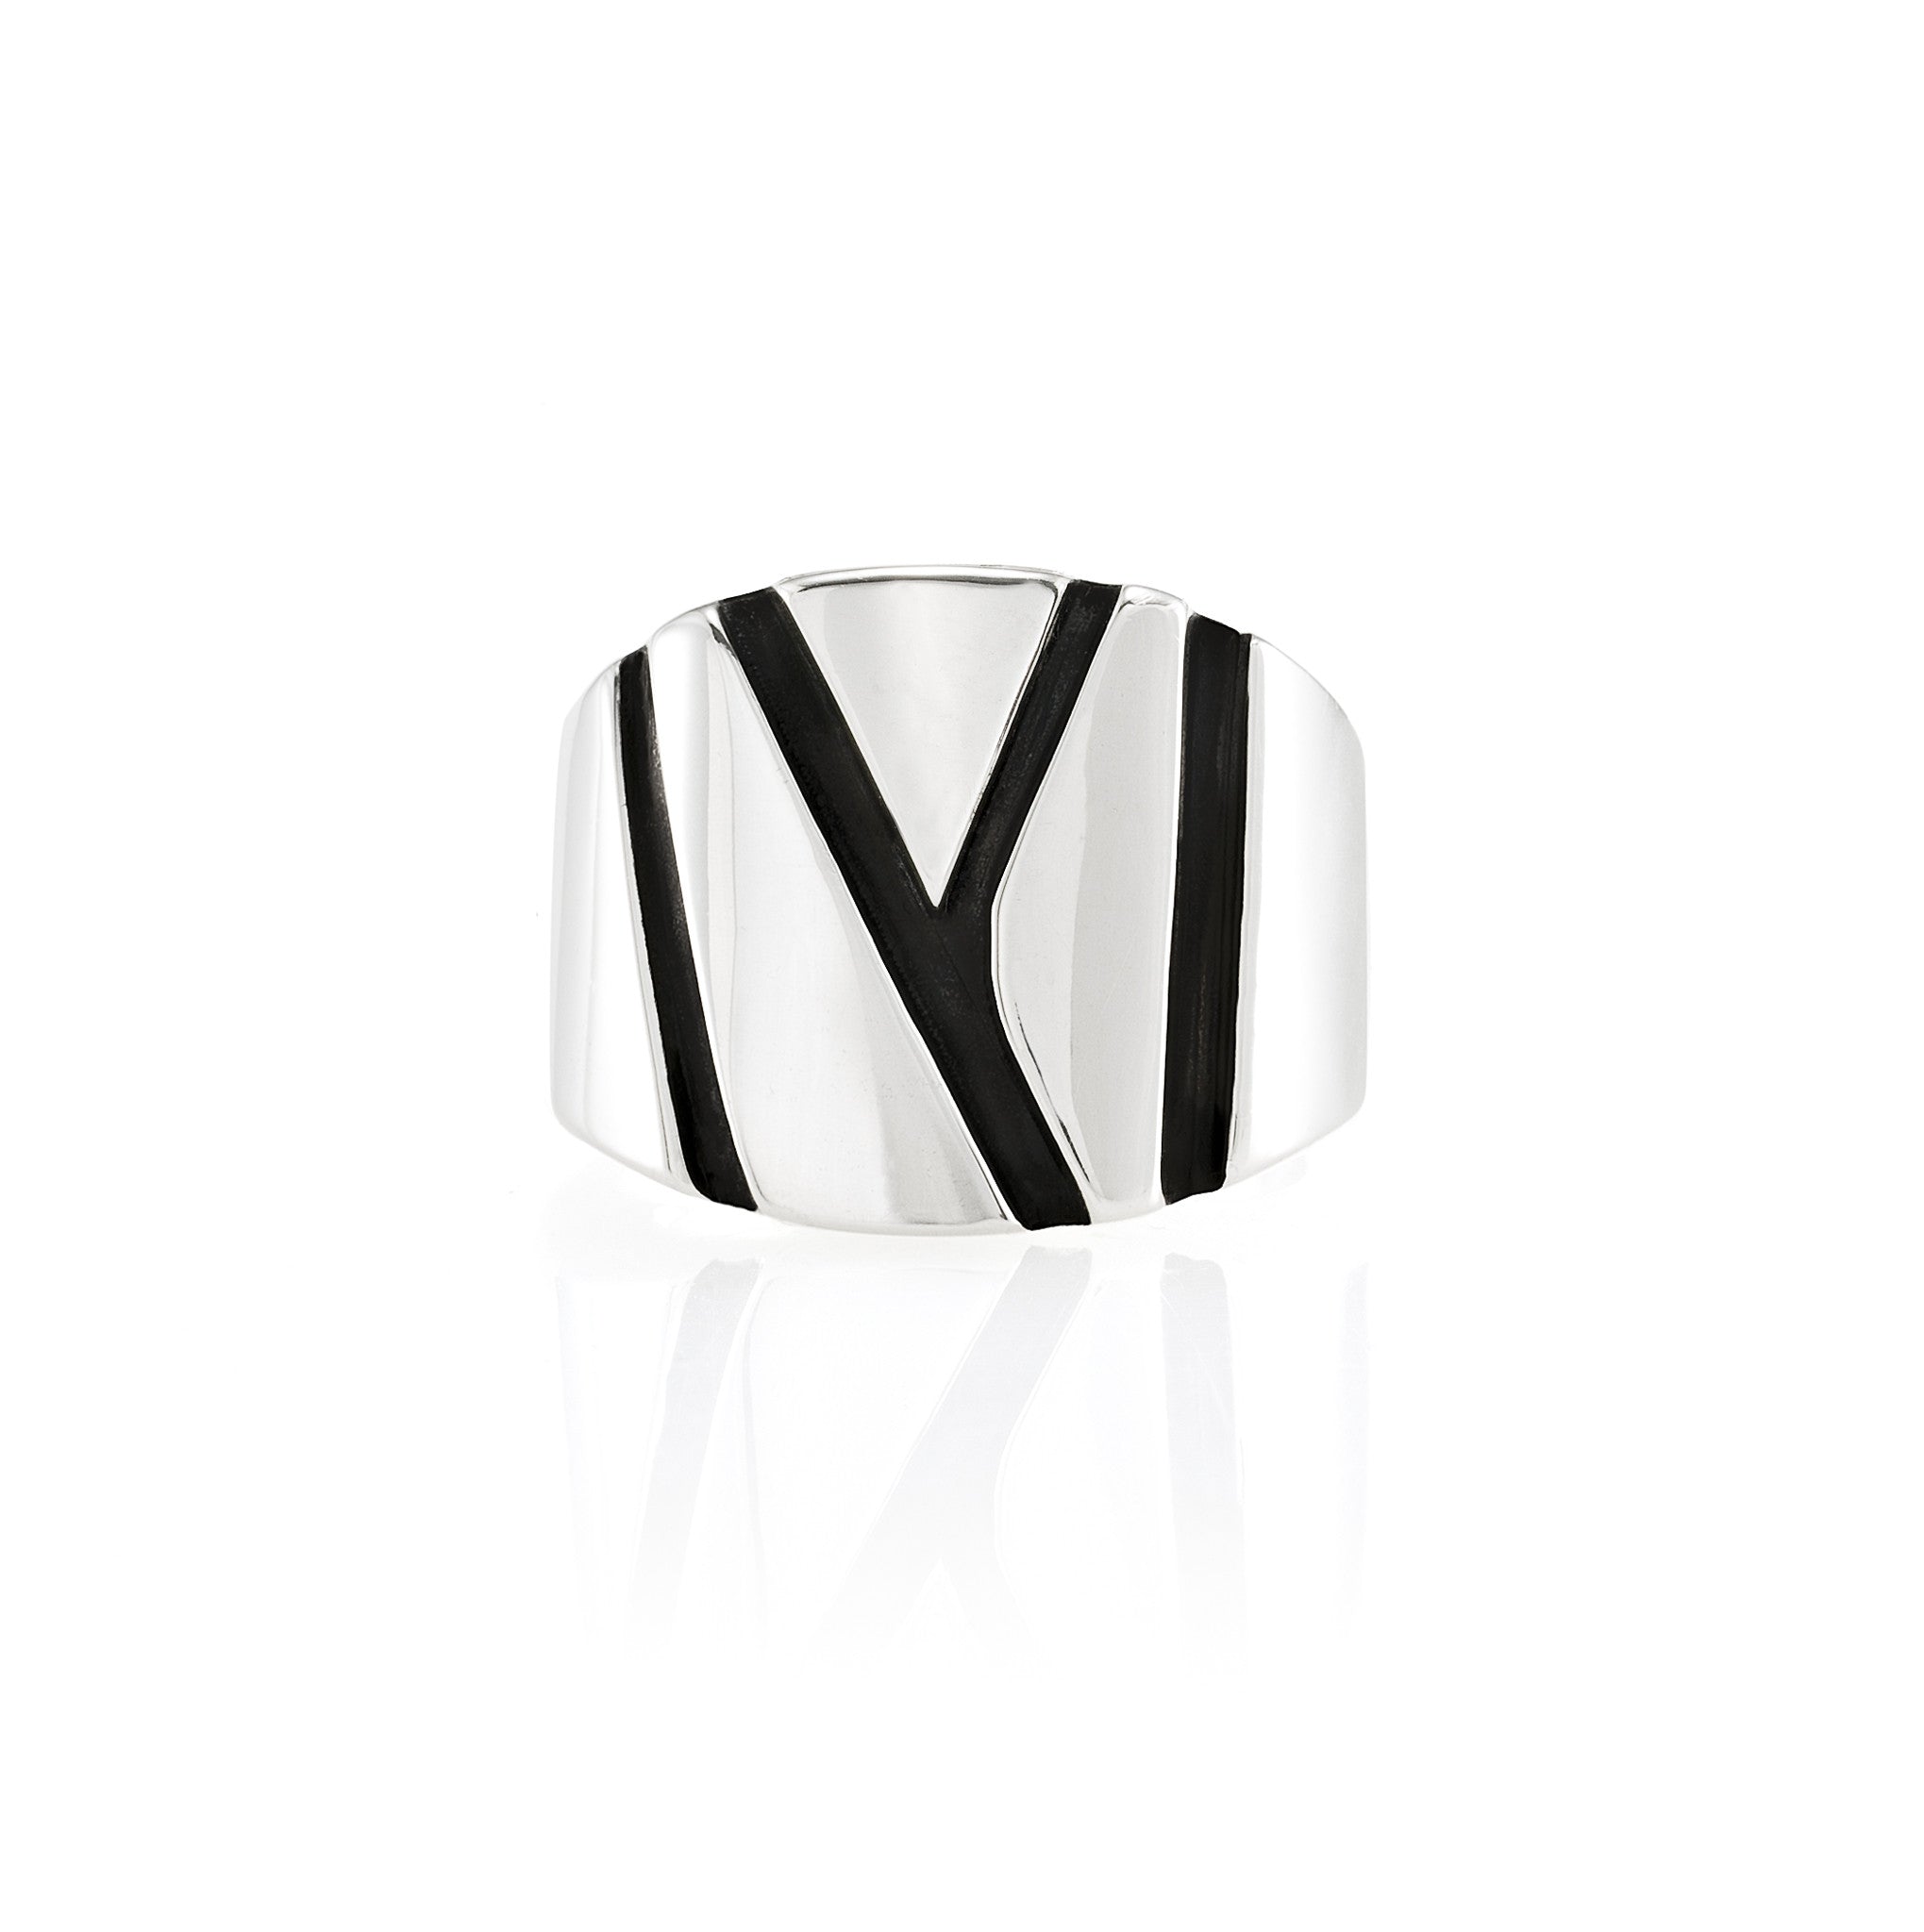 Louis Vuitton Silver Ring Mens